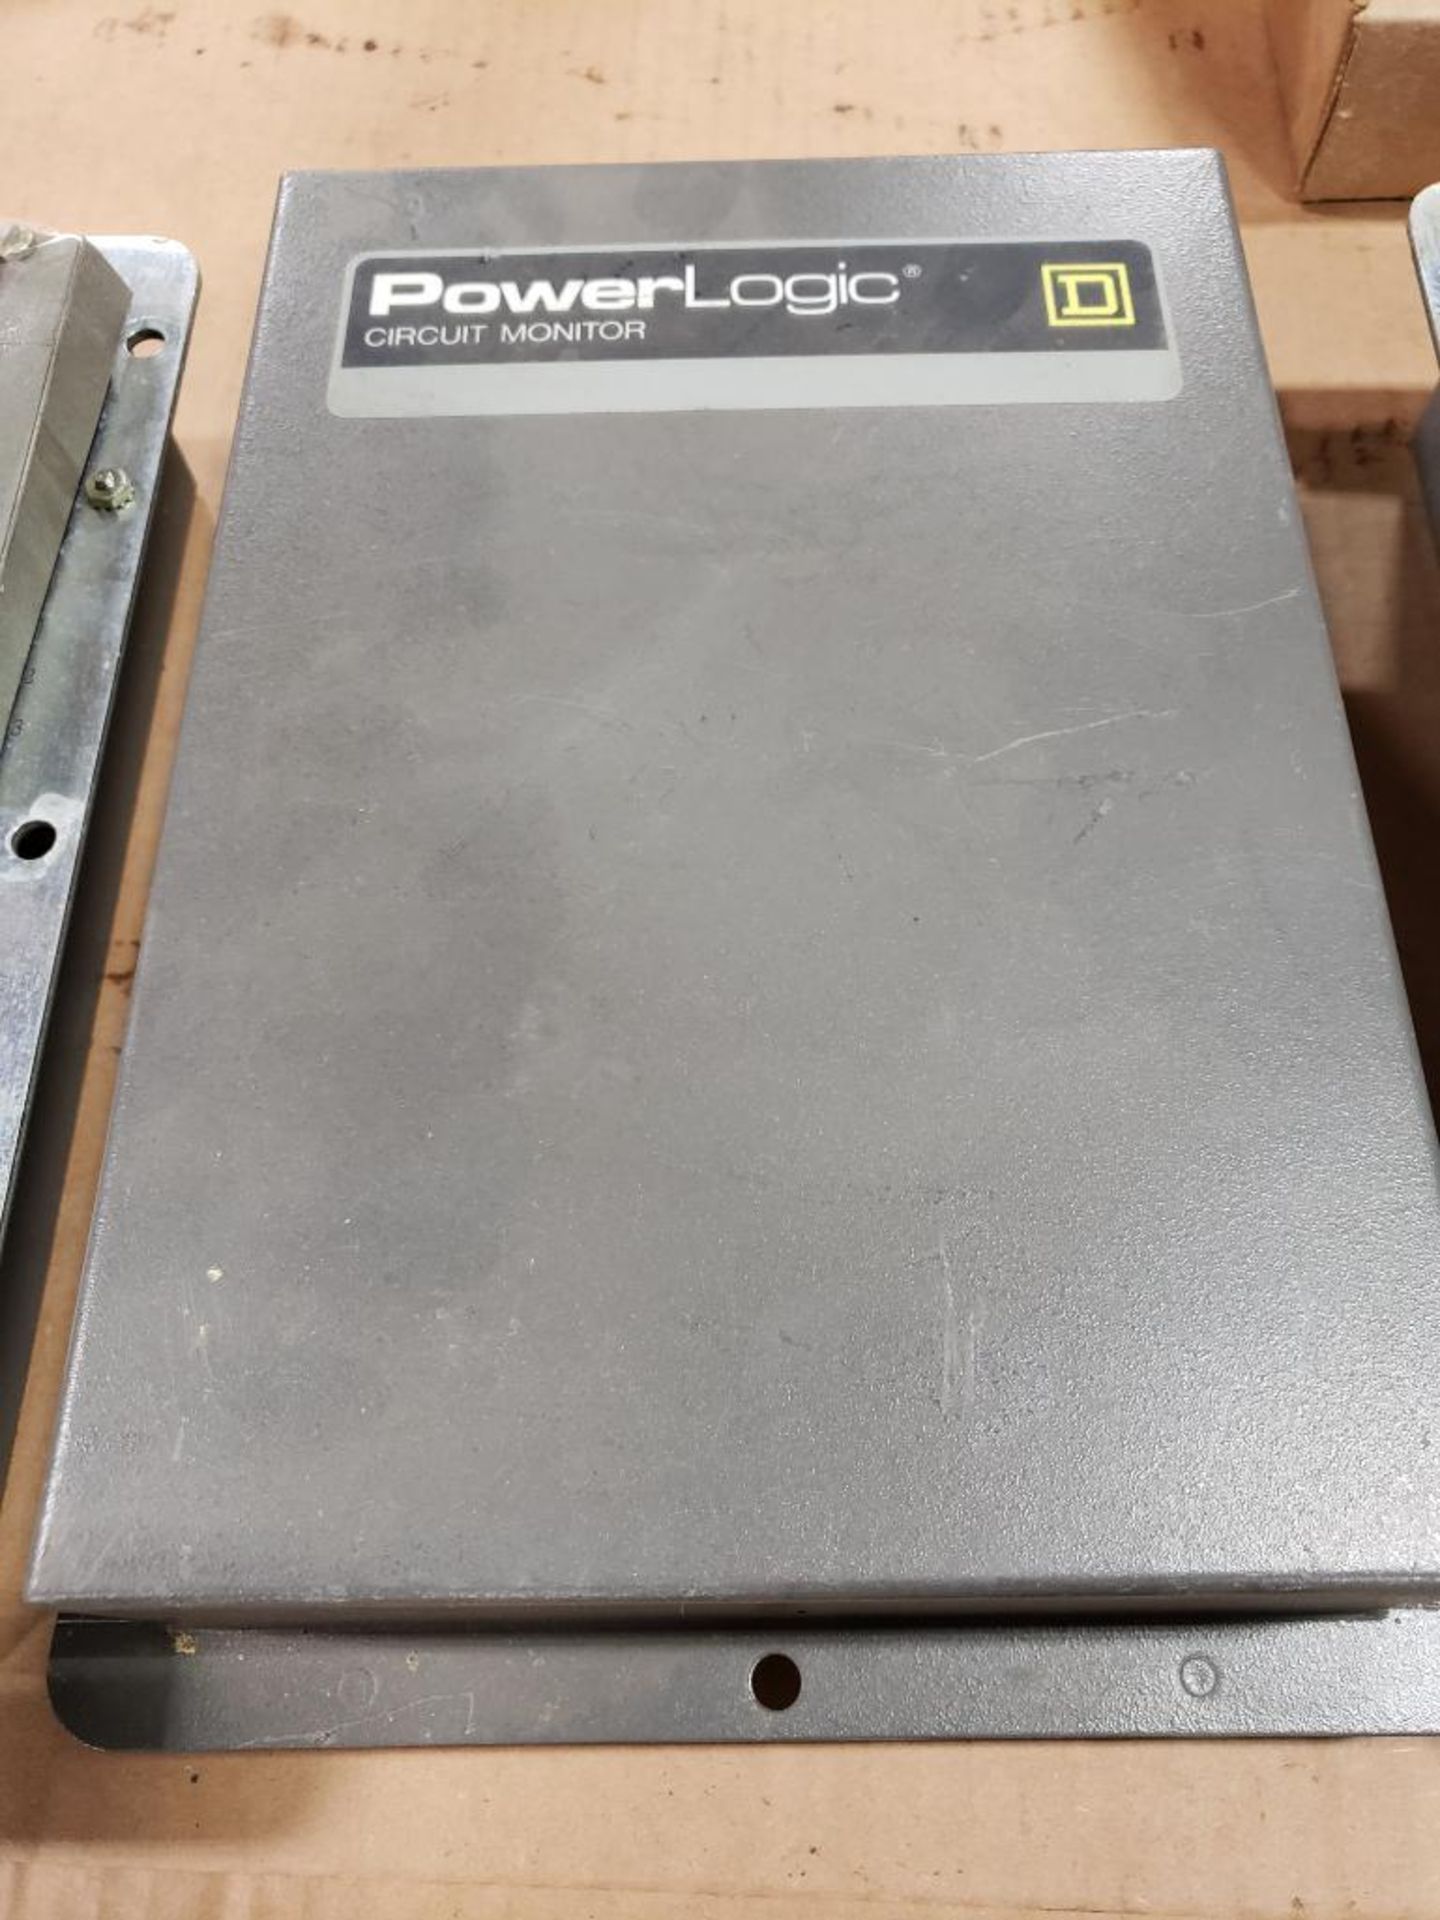 Square-D PowerLogic circuit monitor. Model: CM-108, Cat. No.: CM108X1, Class 3020.